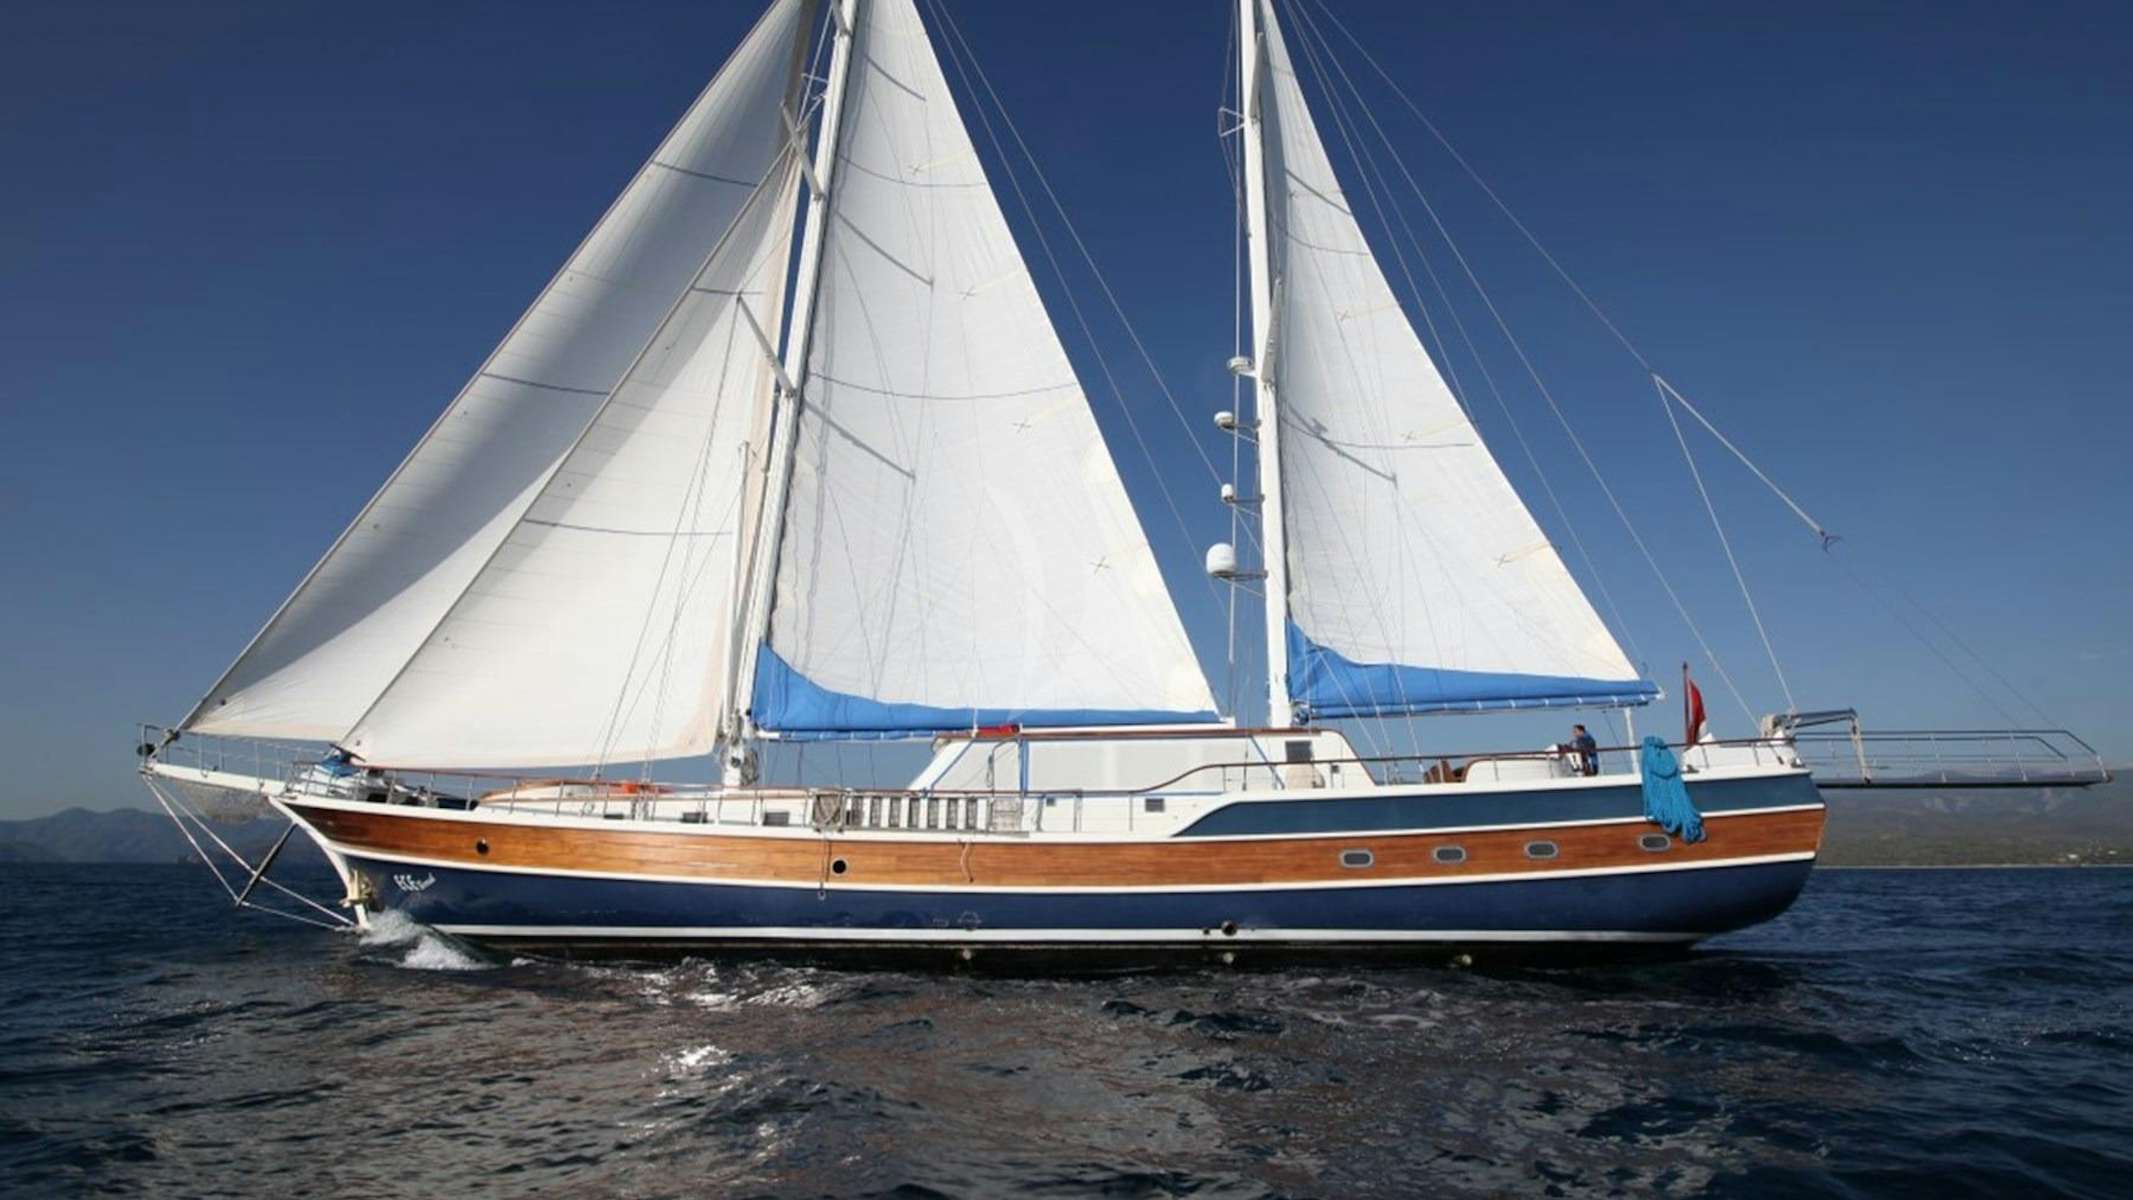 Watch Video for ECE BERRAK Yacht for Charter